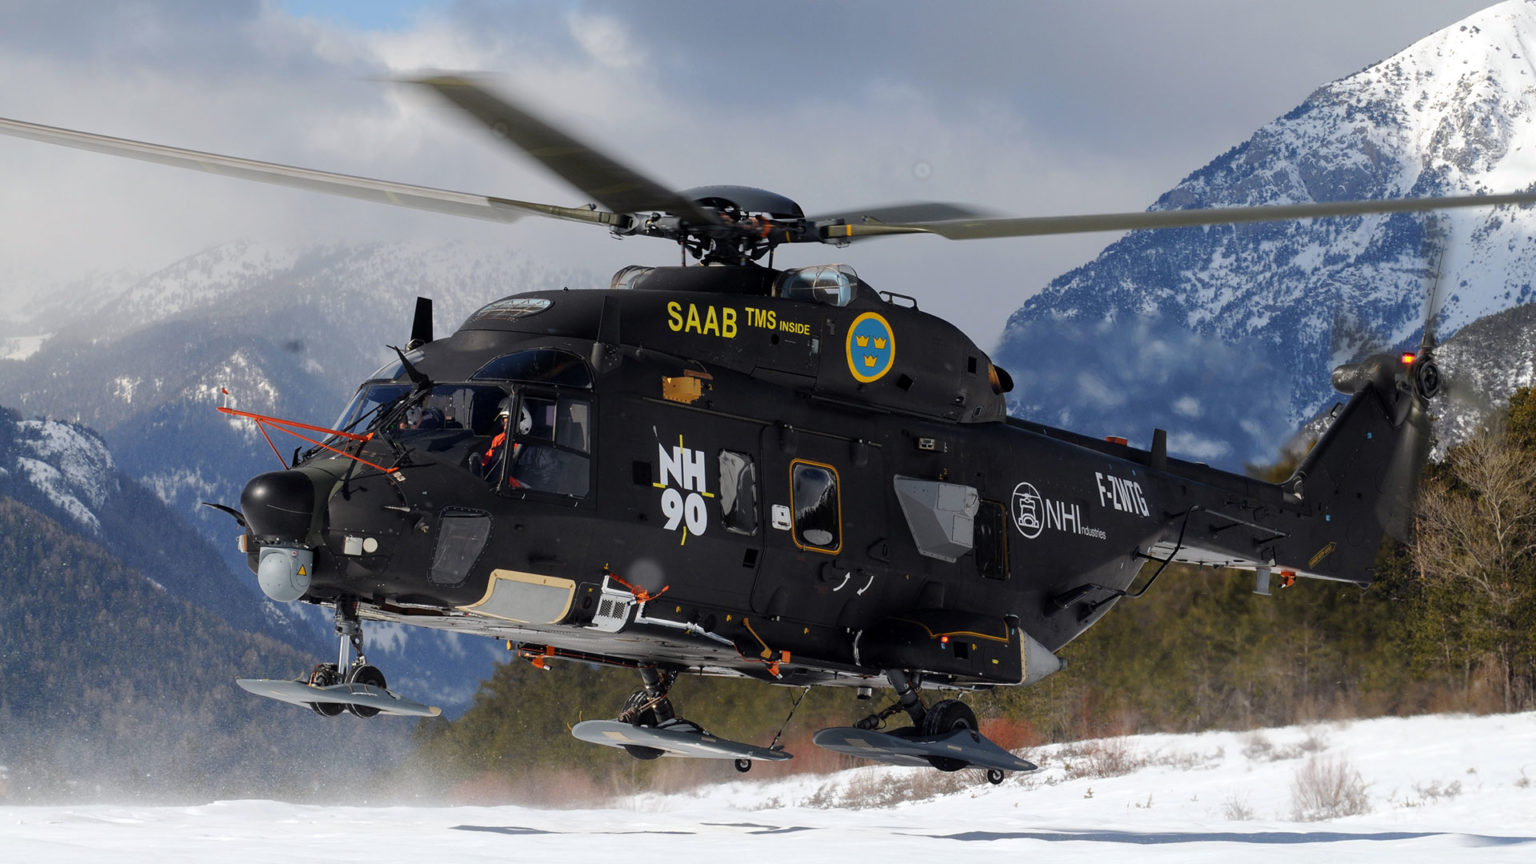 NH90 Ski set